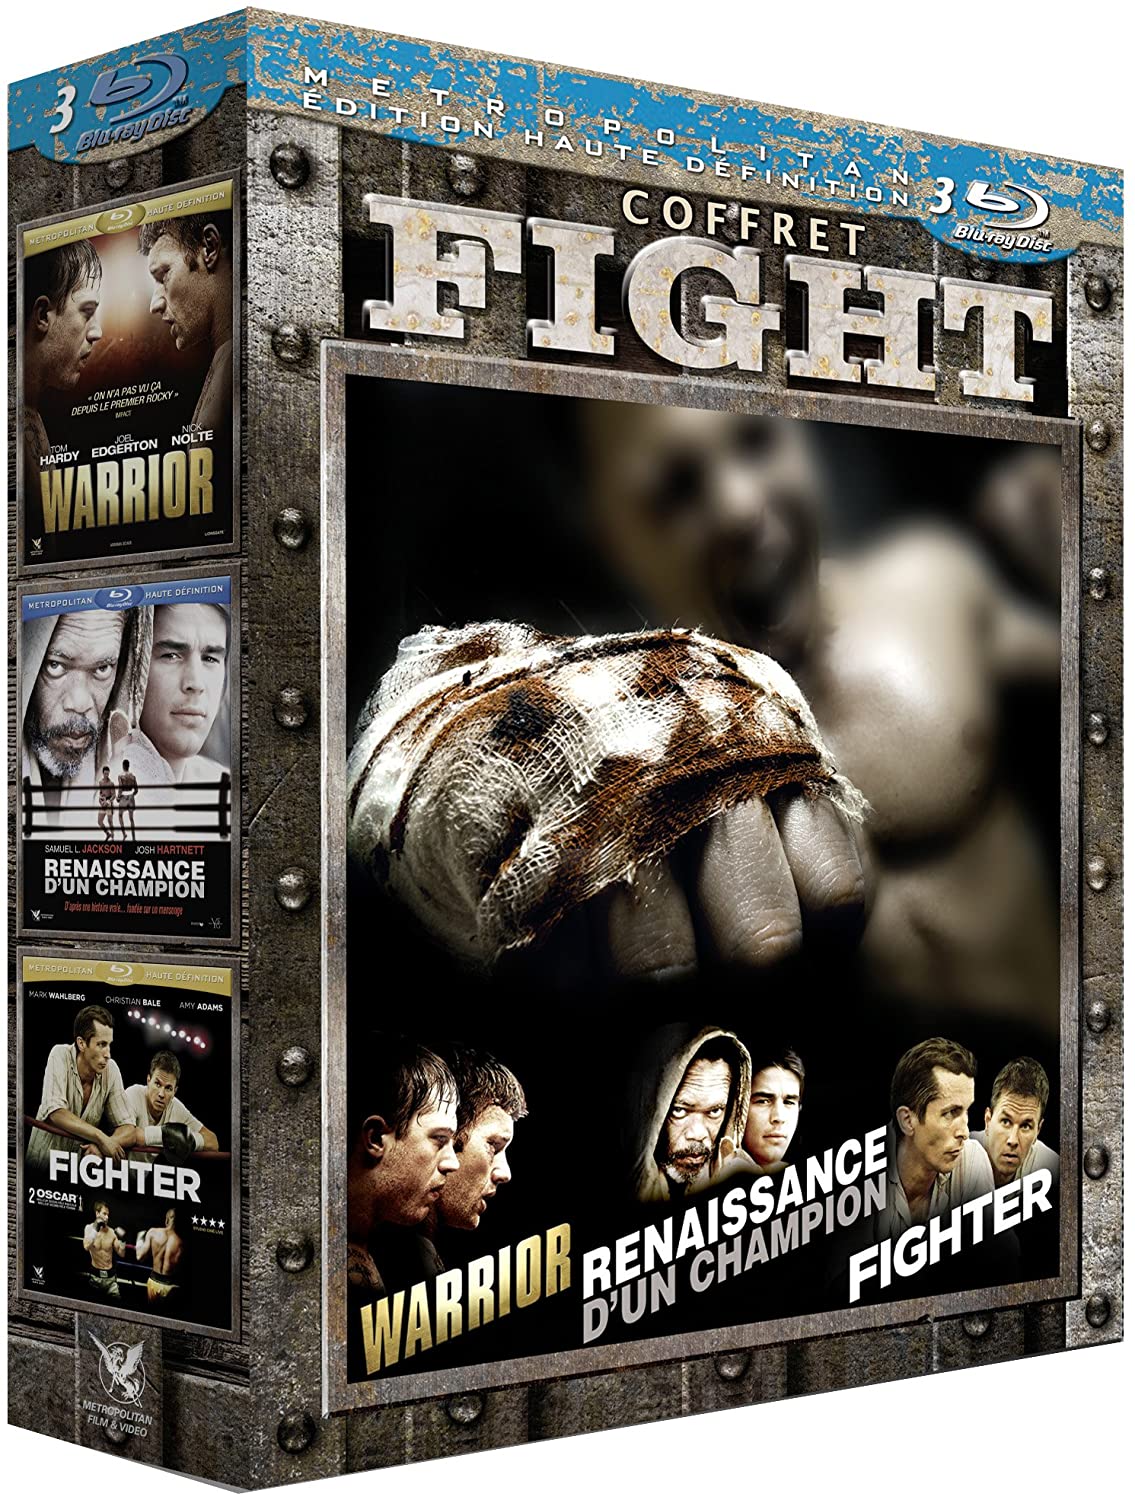 Film action Warrior + Renaissance d'un Champion + Fighter [Blu-Ray]